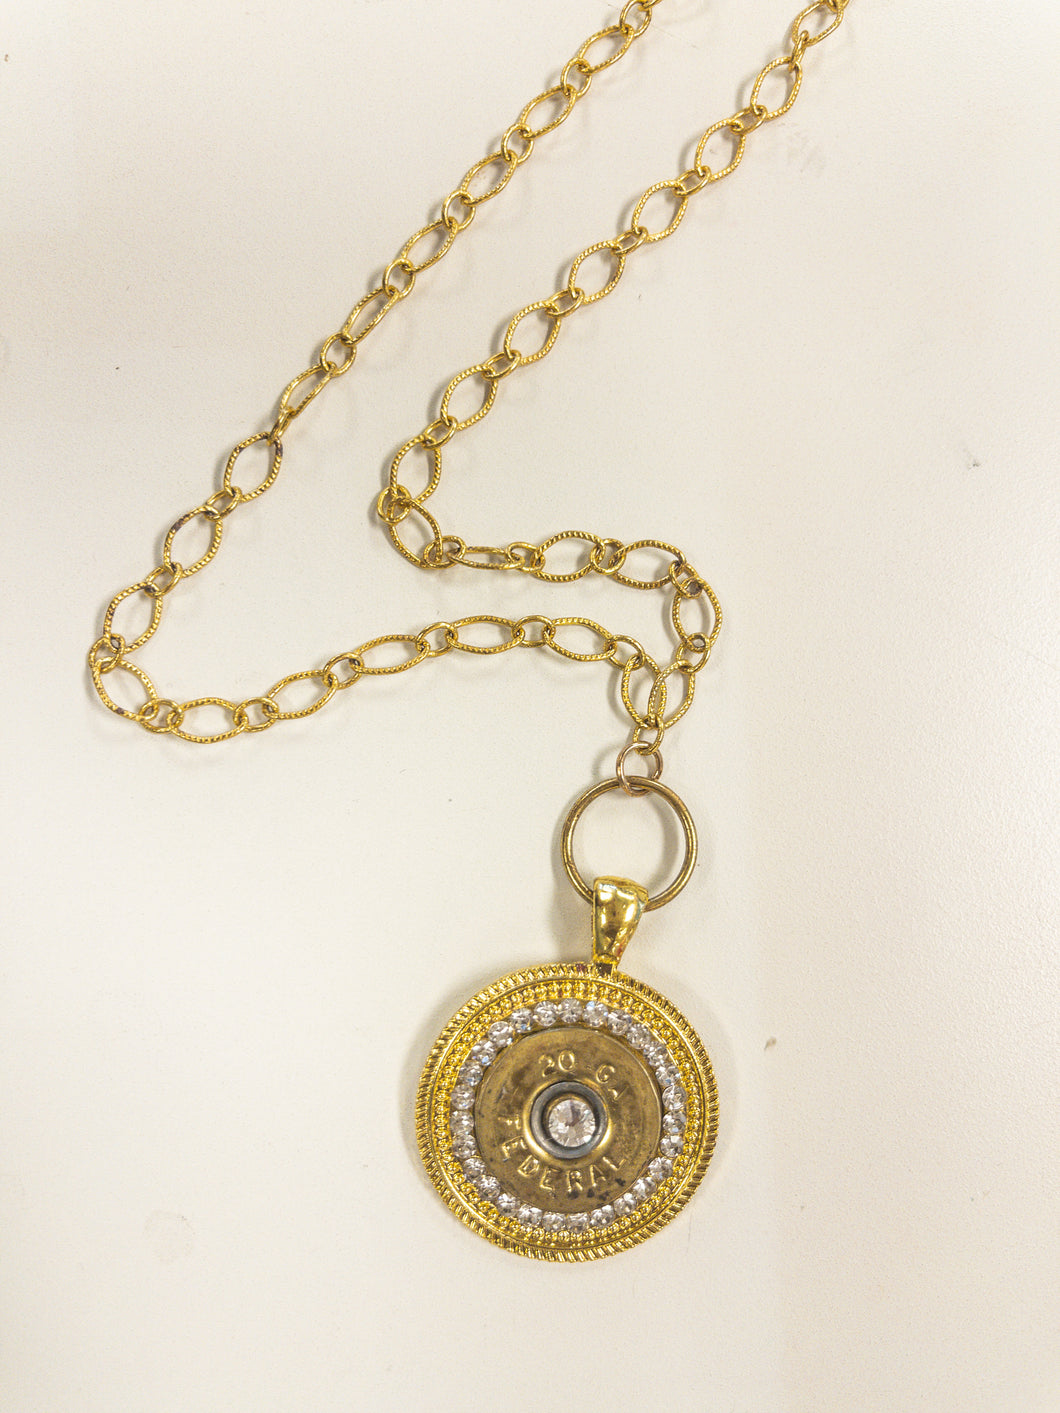 Summer Renee x Gold Bullet Necklace